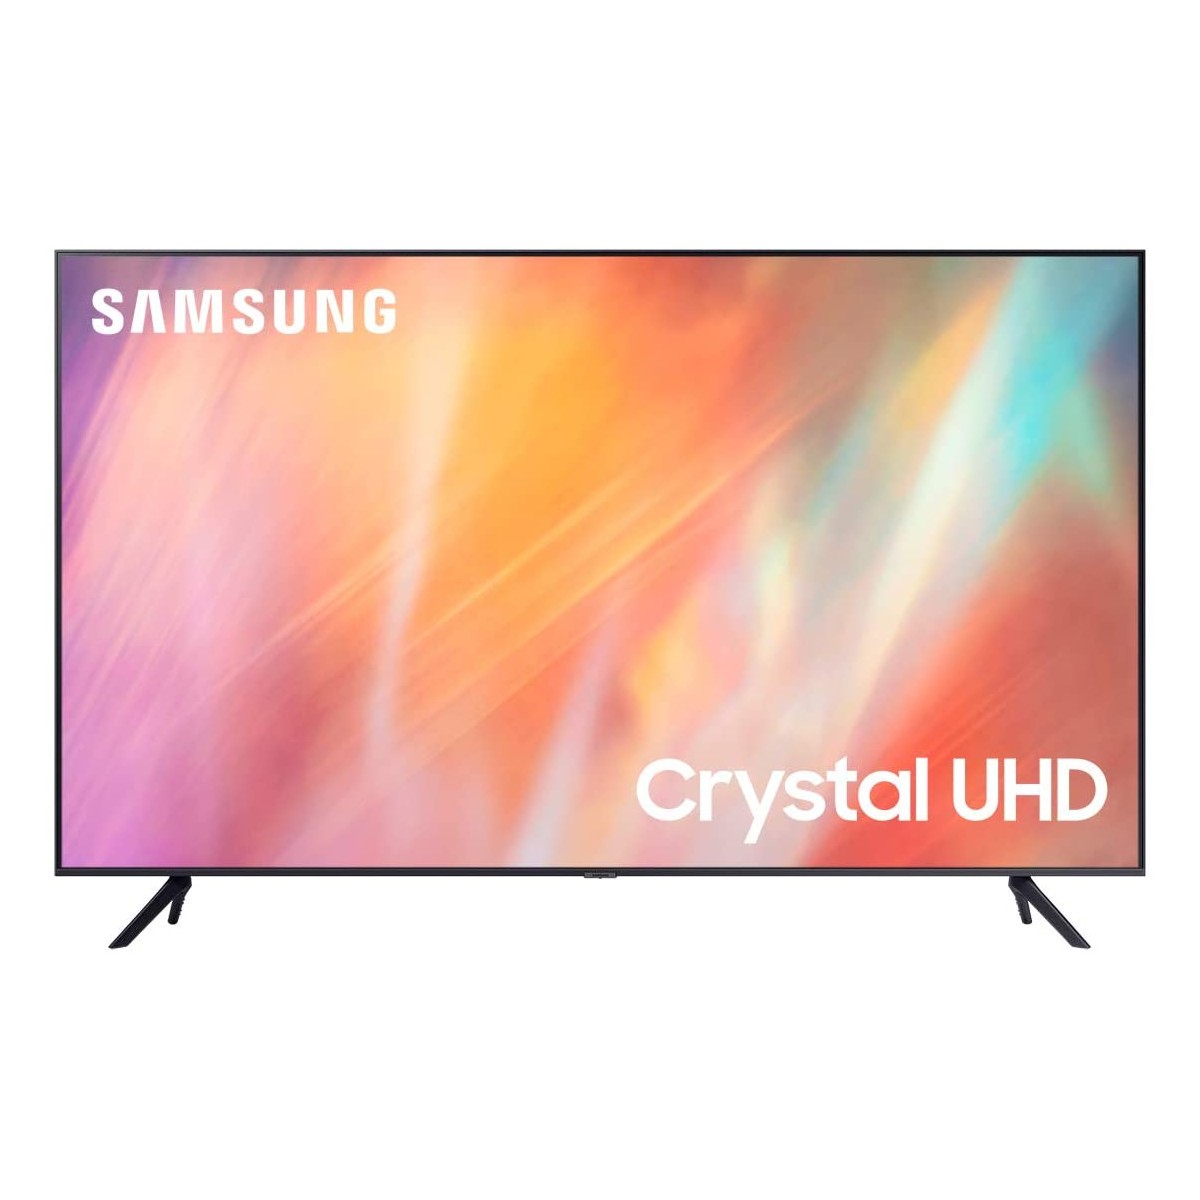 Smart TV 55" Crystal UHD 4K, Samsung, con modalità gaming